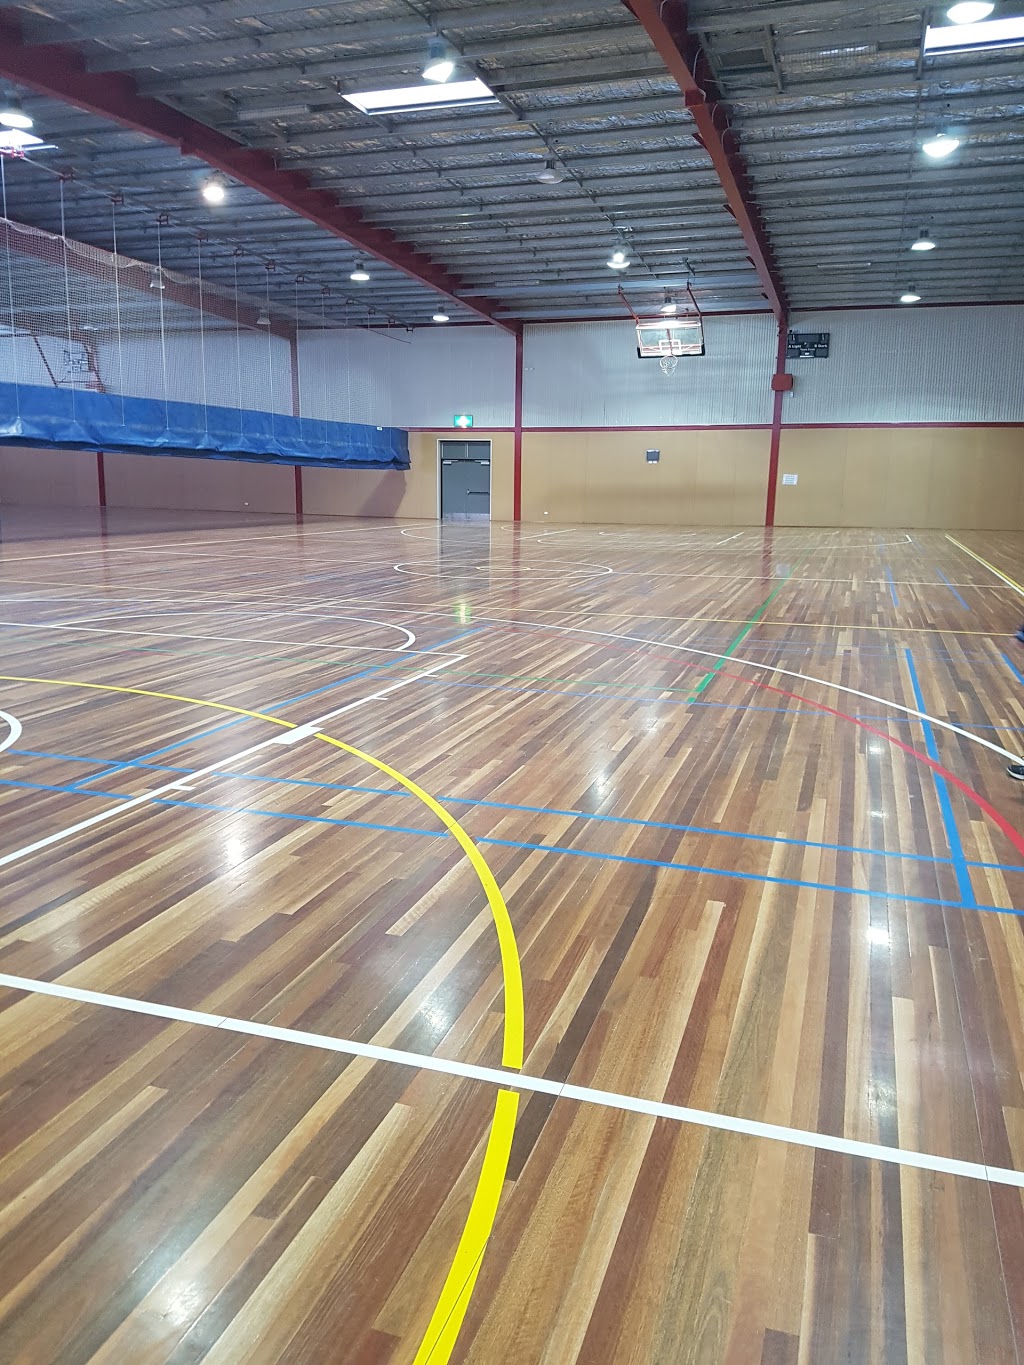 The STADIUM Gisborne Secondary College | gym | Gisborne VIC 3437, Australia | 0354283691 OR +61 3 5428 3691